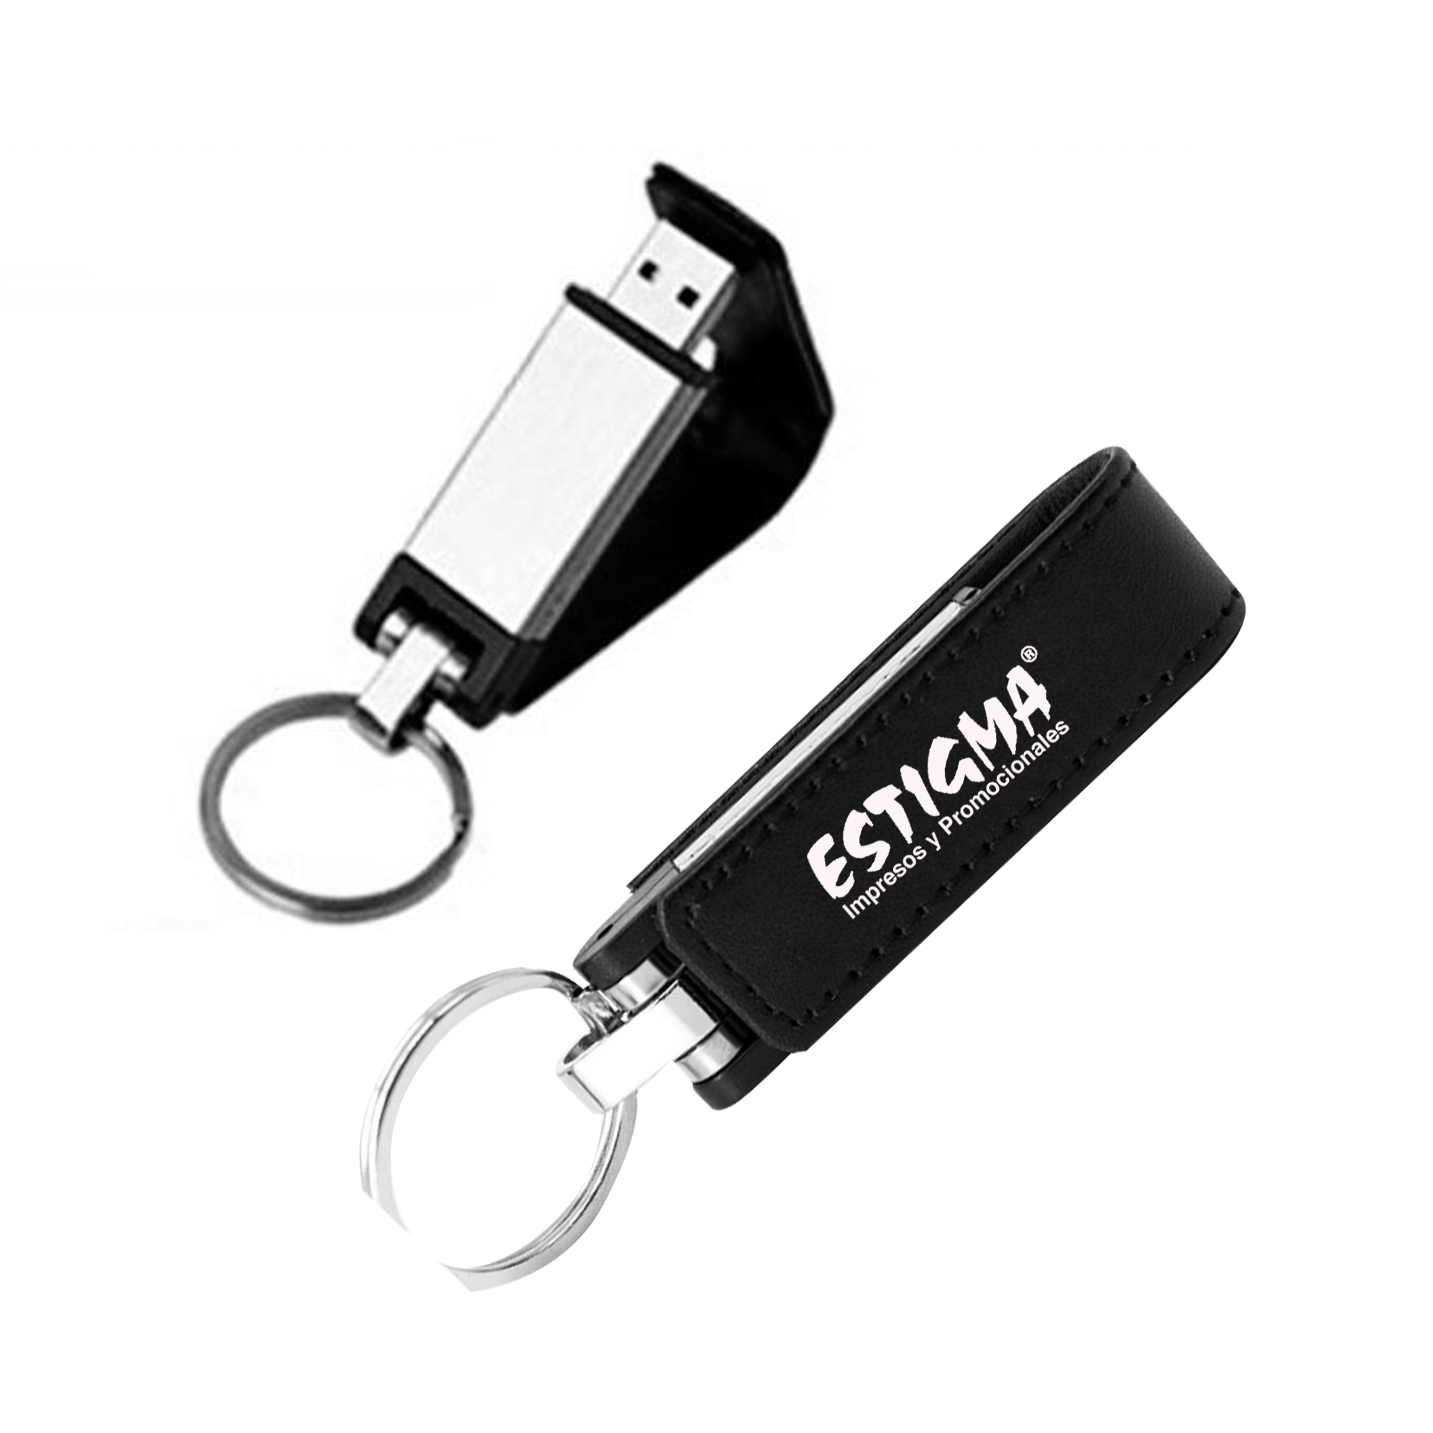 USB PROMOCIONAL, USB MAYOREO